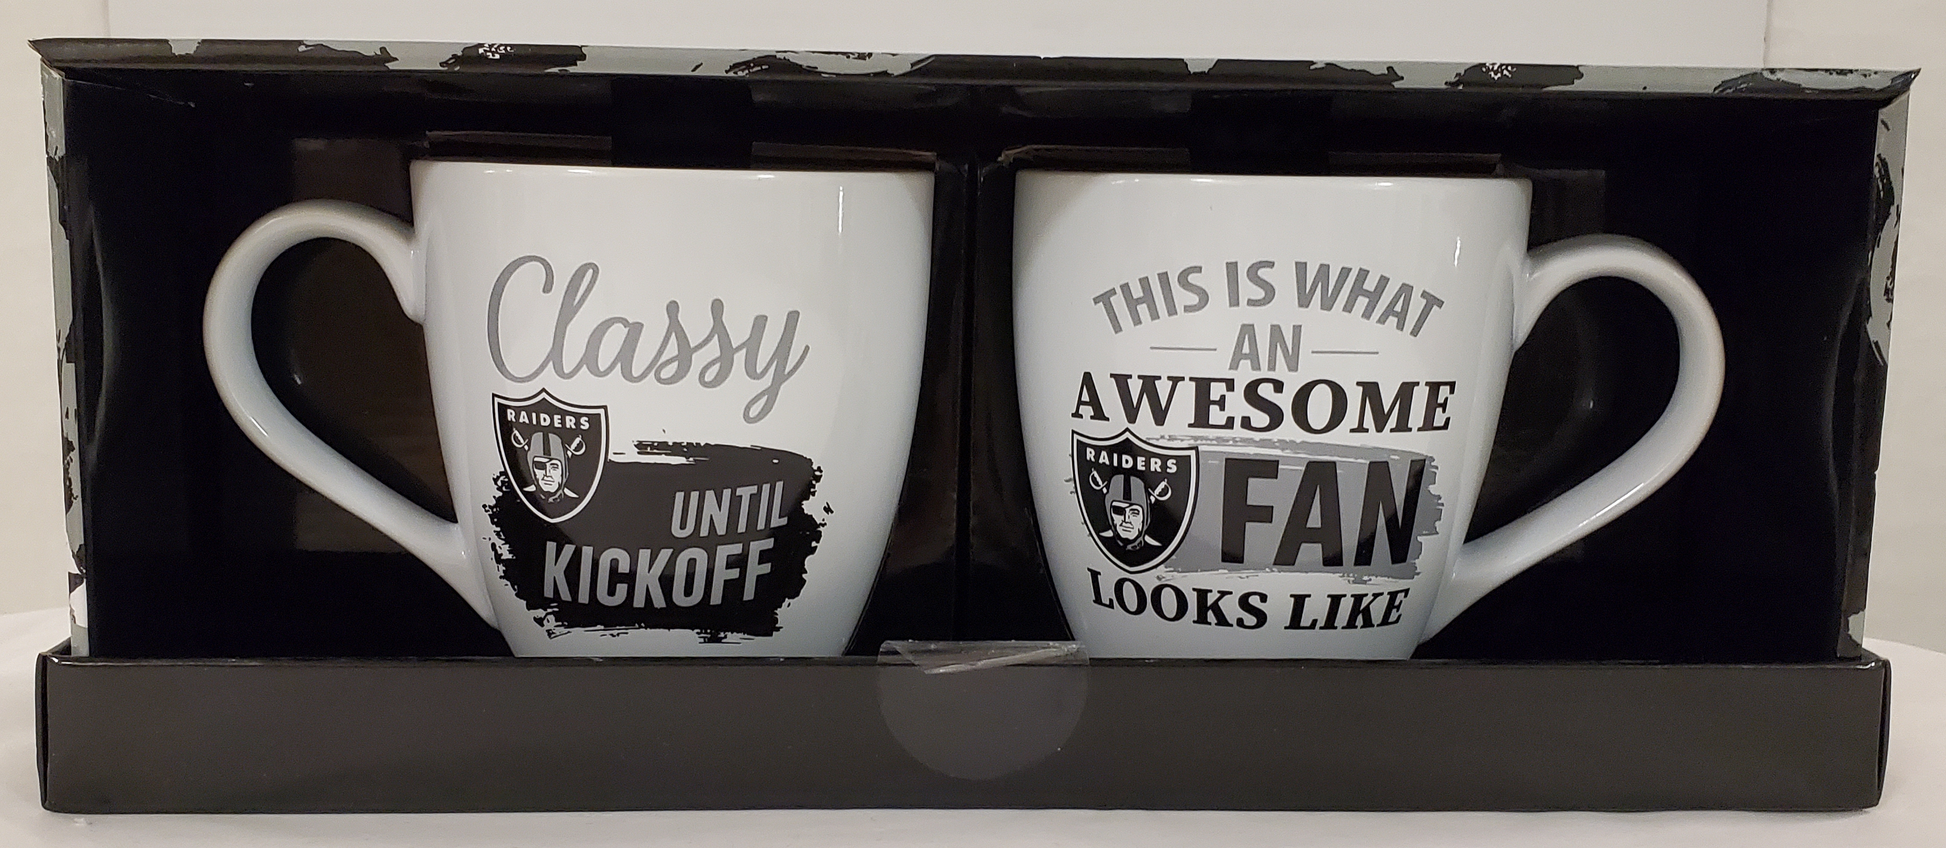 Dallas Cowboys 2 Piece 17oz Ceramic Coffee Mug Set with Gift Box